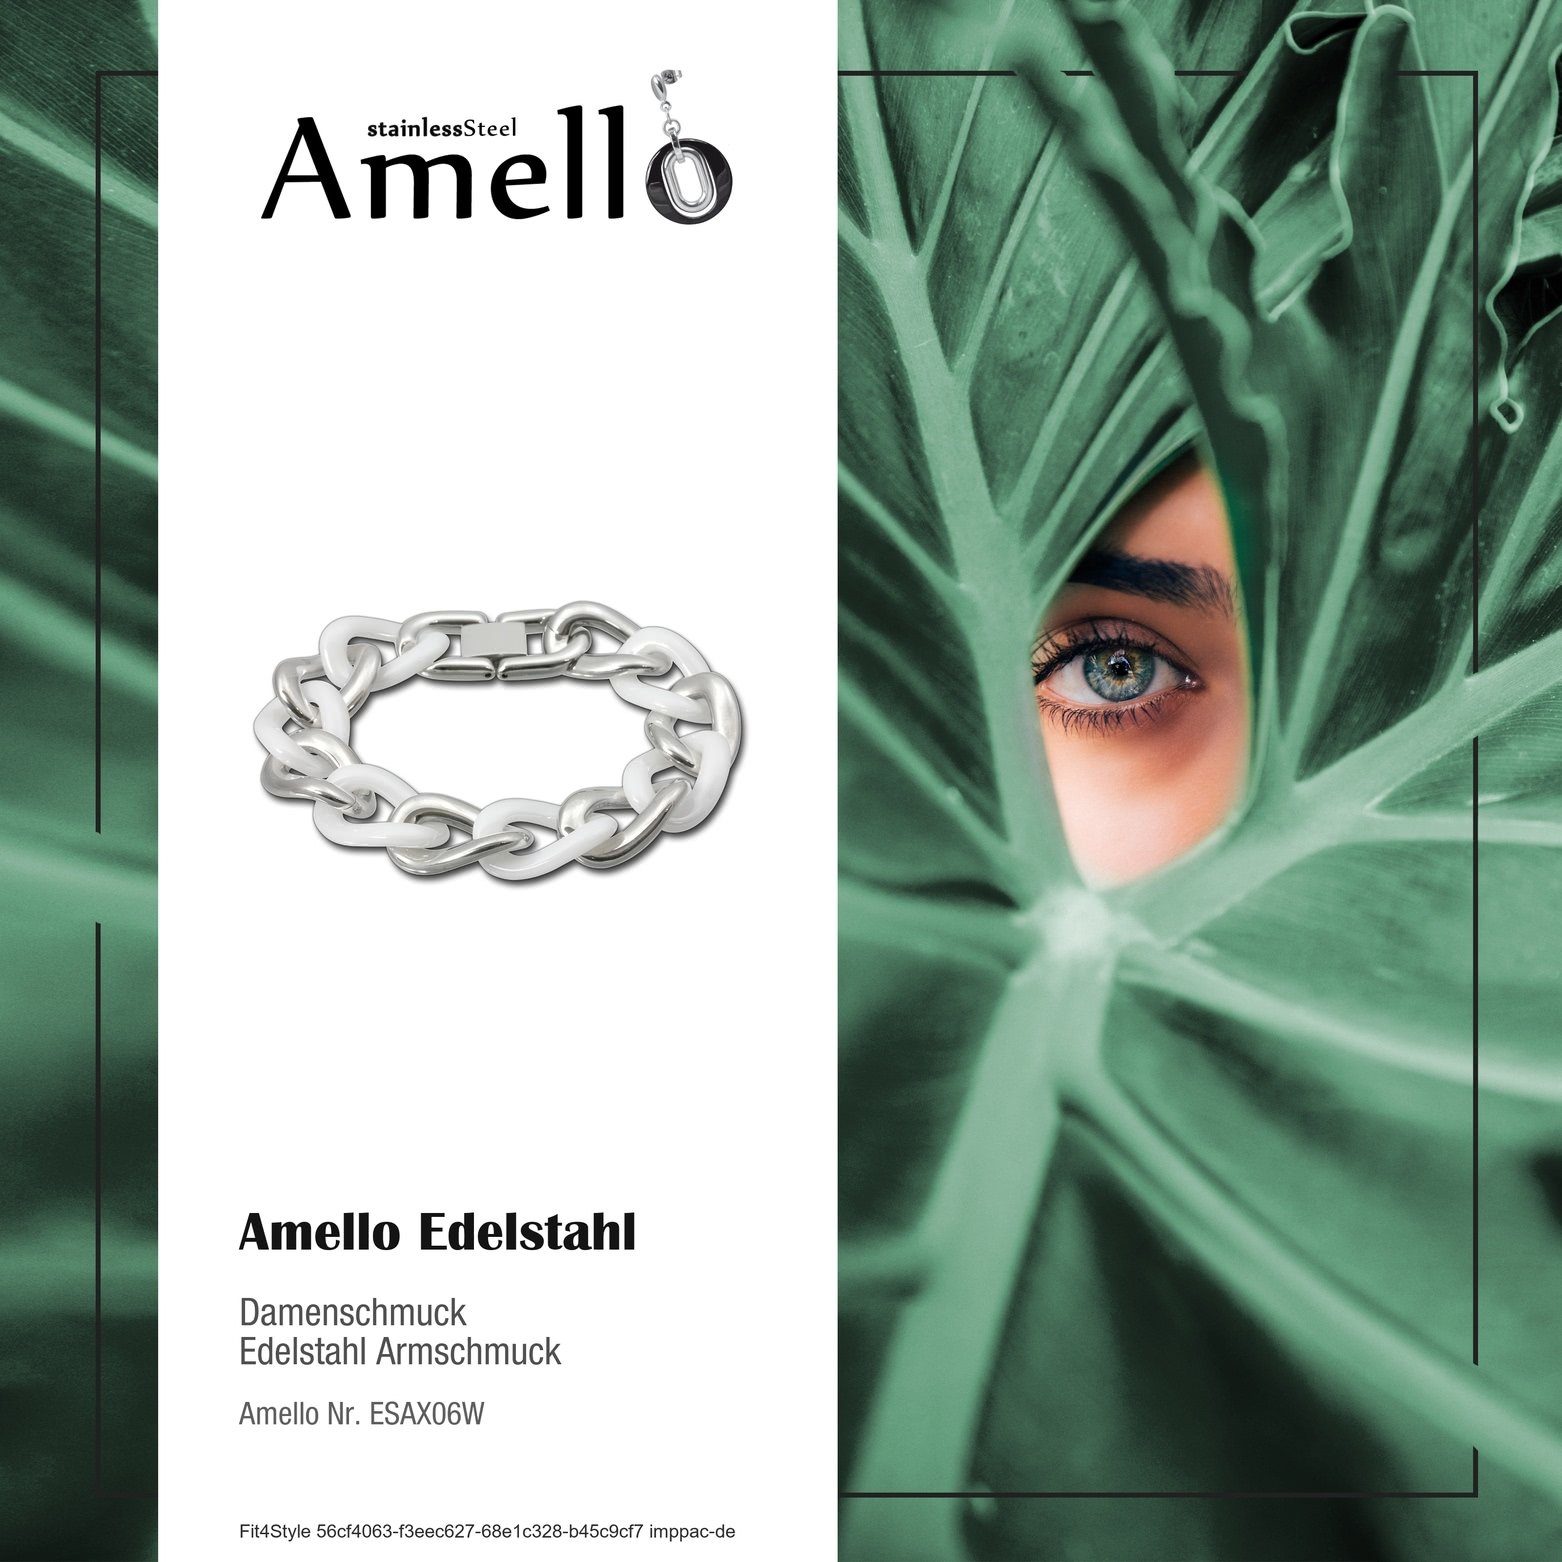 Amello Edelstahlarmband Amello Panzer (Armband), silber Edelstahl Damen Armband Steel) Big Armbänder (Stainless für weiß